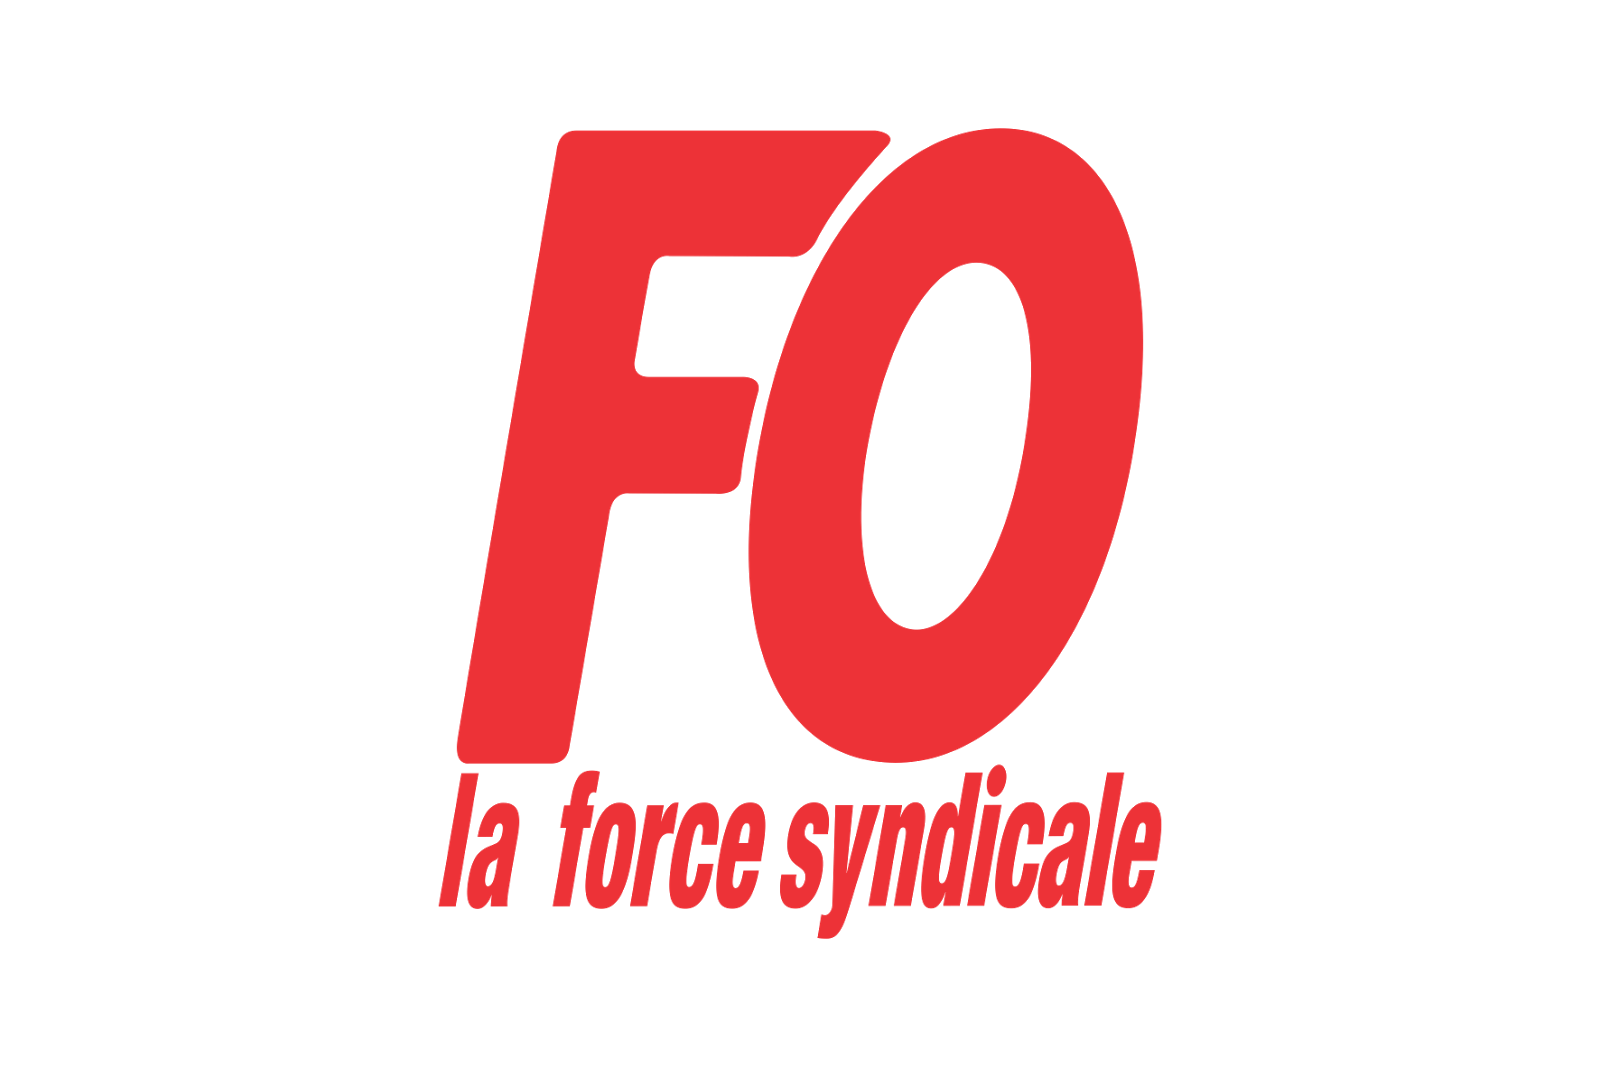 Fo Logo - FO La Force Syndicale Logo - logo cdr vector